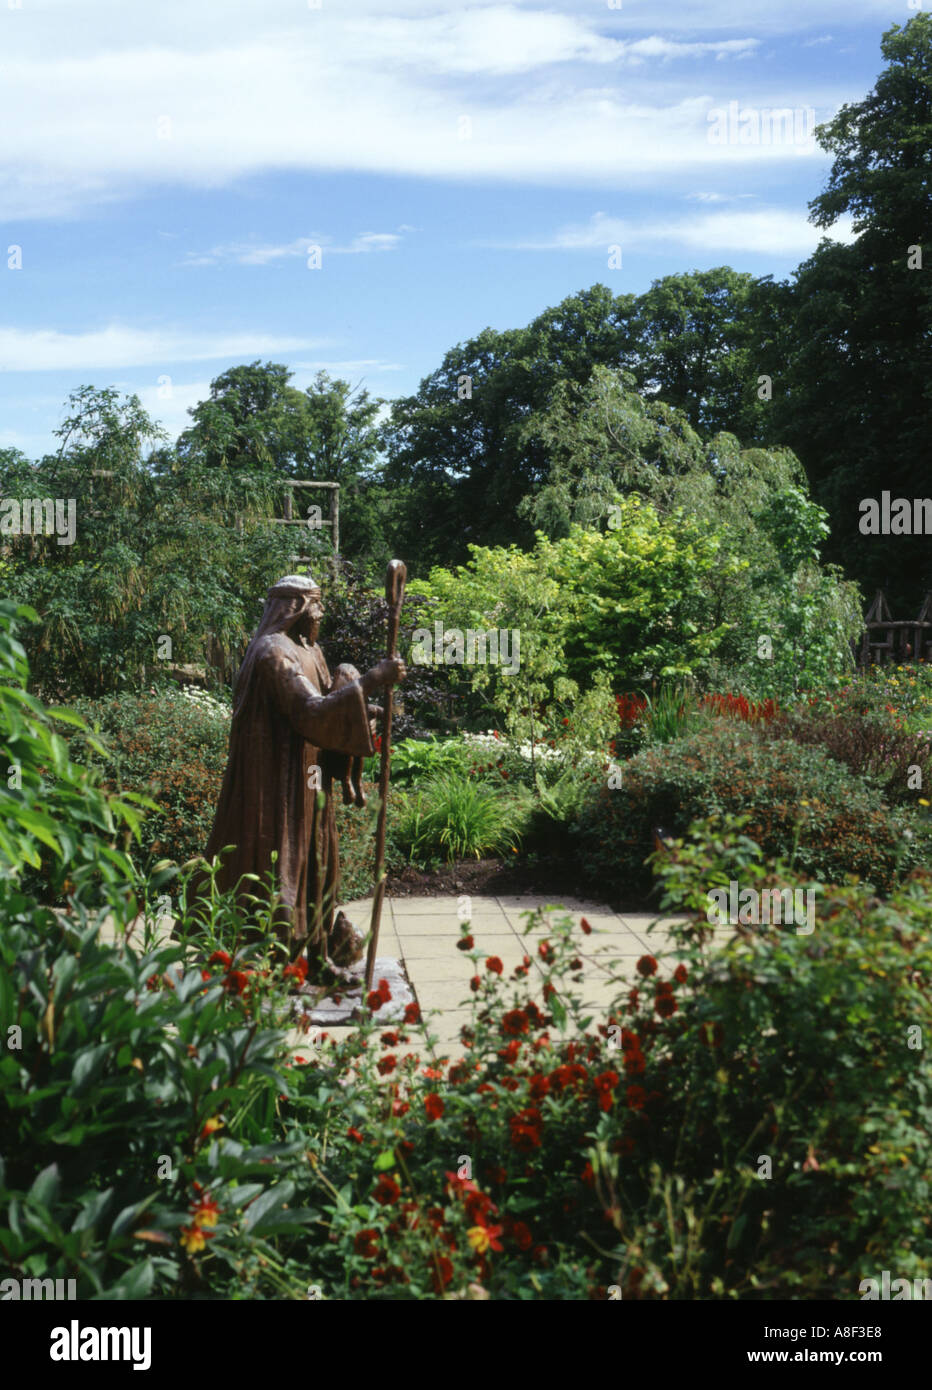 dh Bible Garden ELGIN MORAY Flora park shepherd statue bible characters Stock Photo